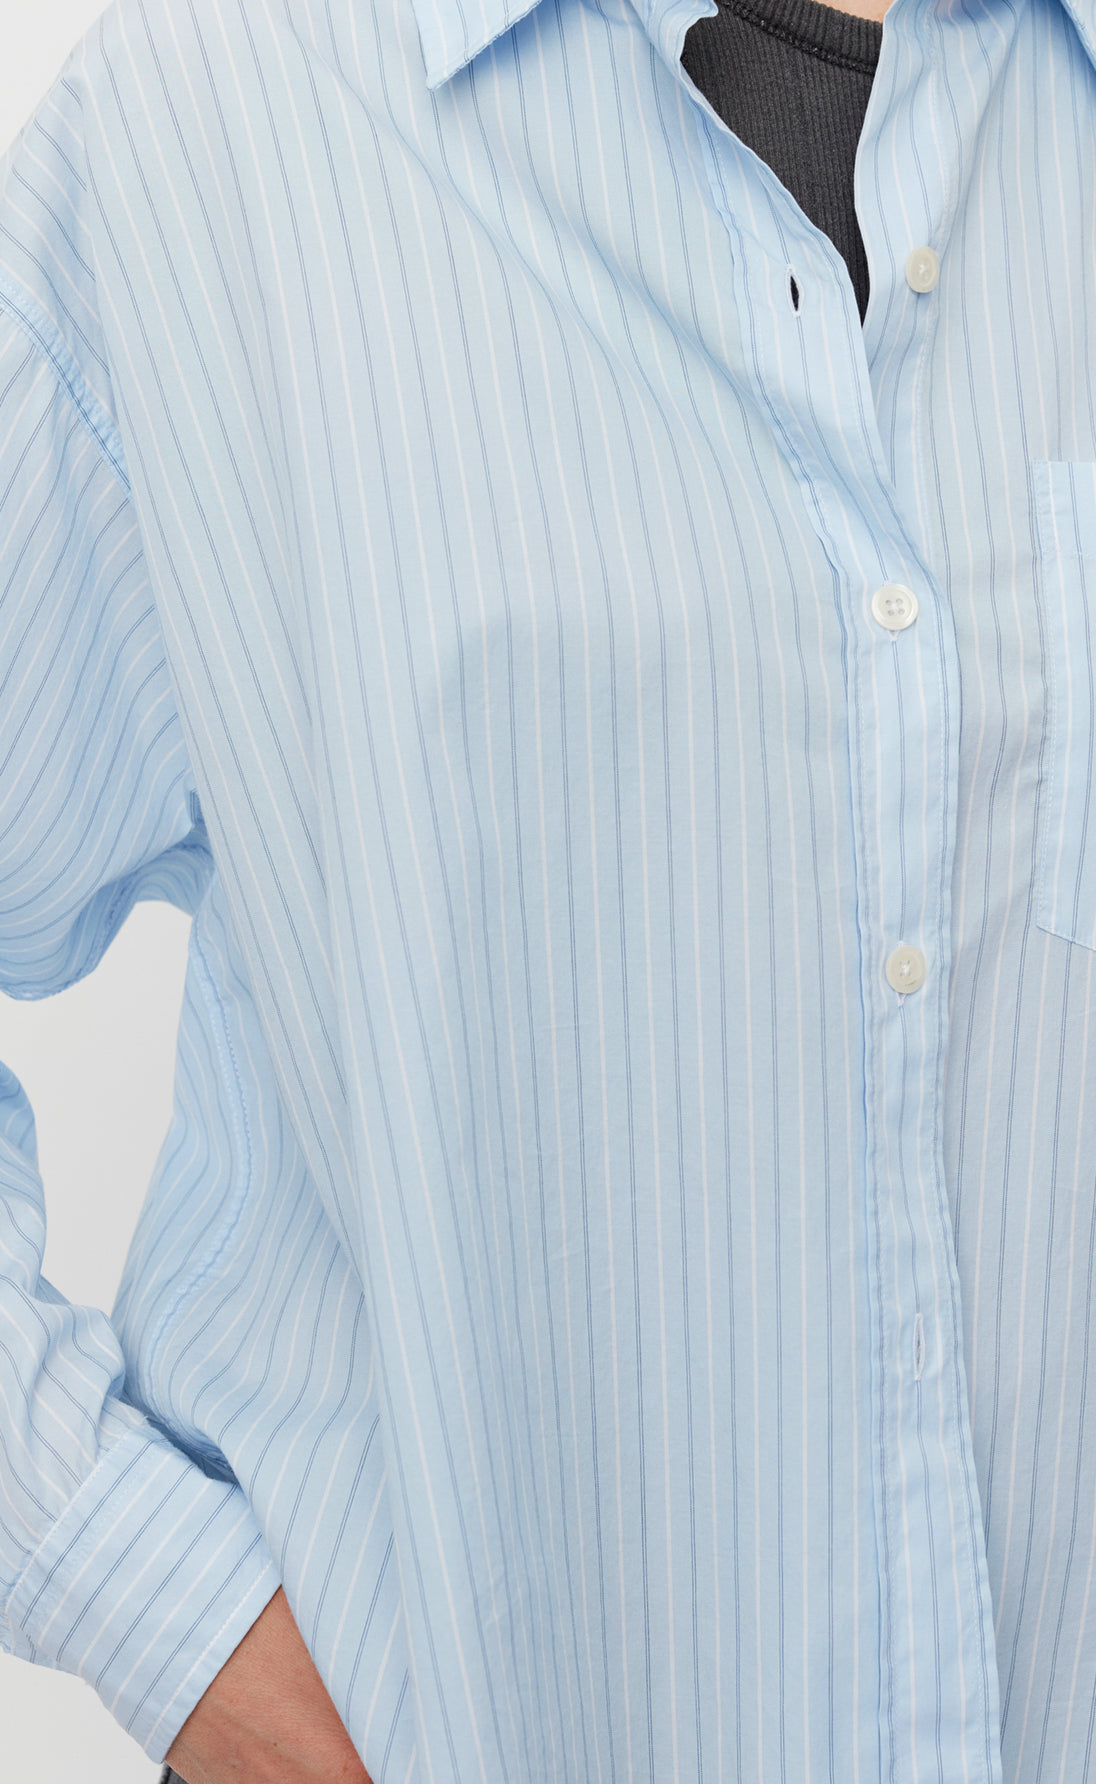 Format Shirt - Corporate Stripe